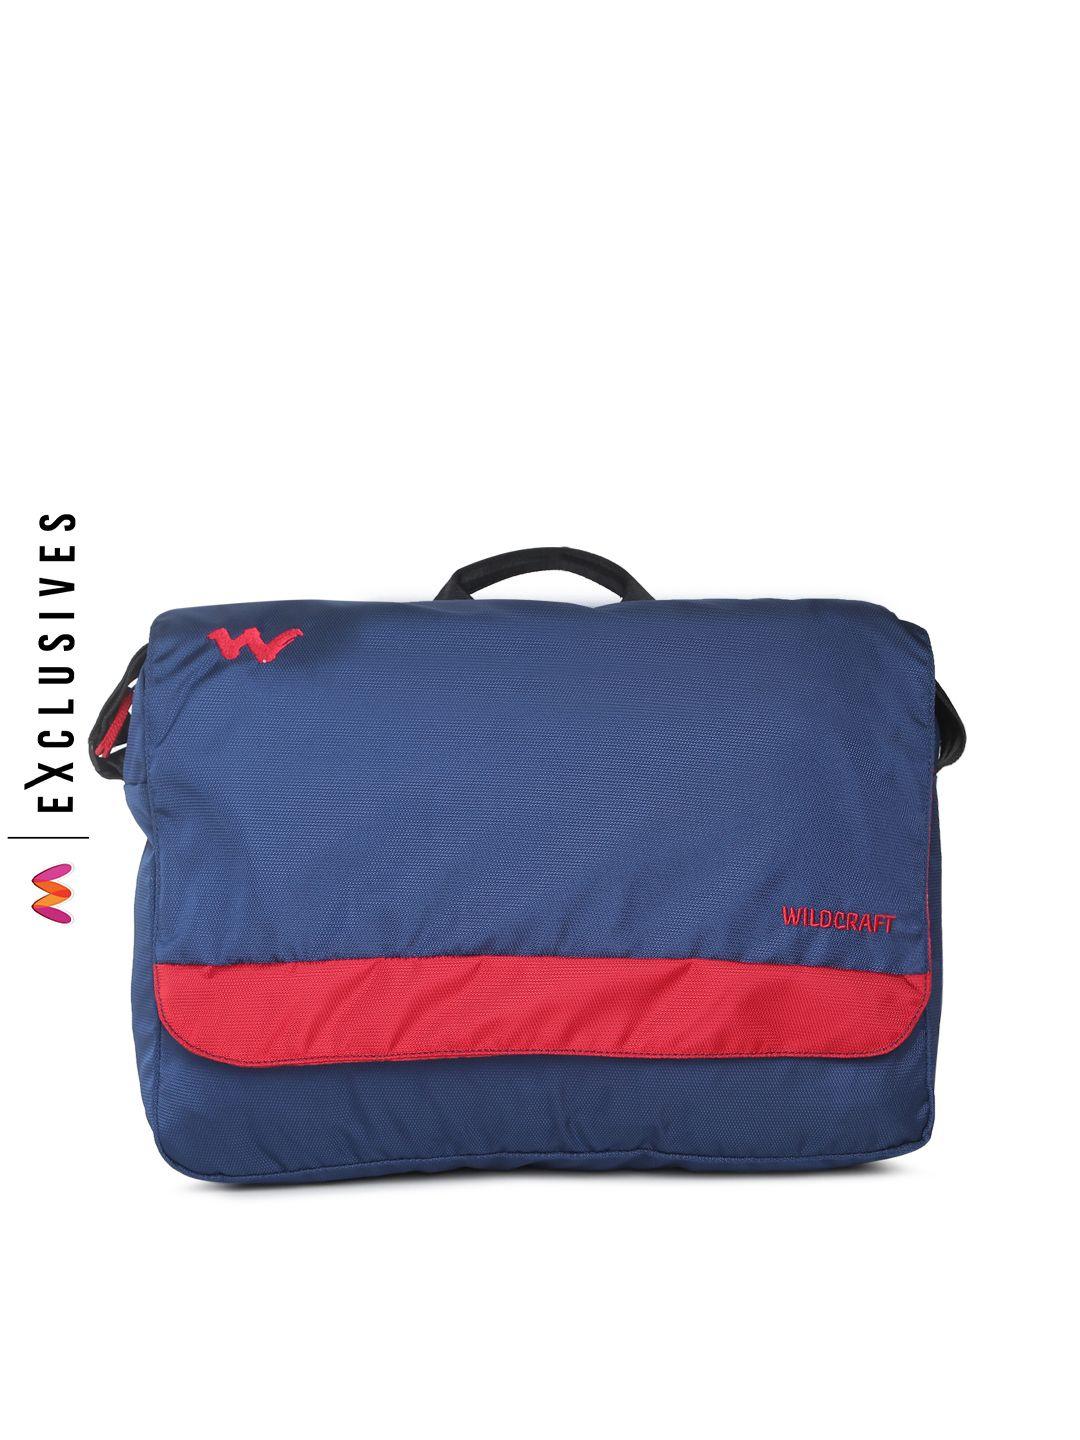 wildcraft unisex blue & red courier 3 messenger bag